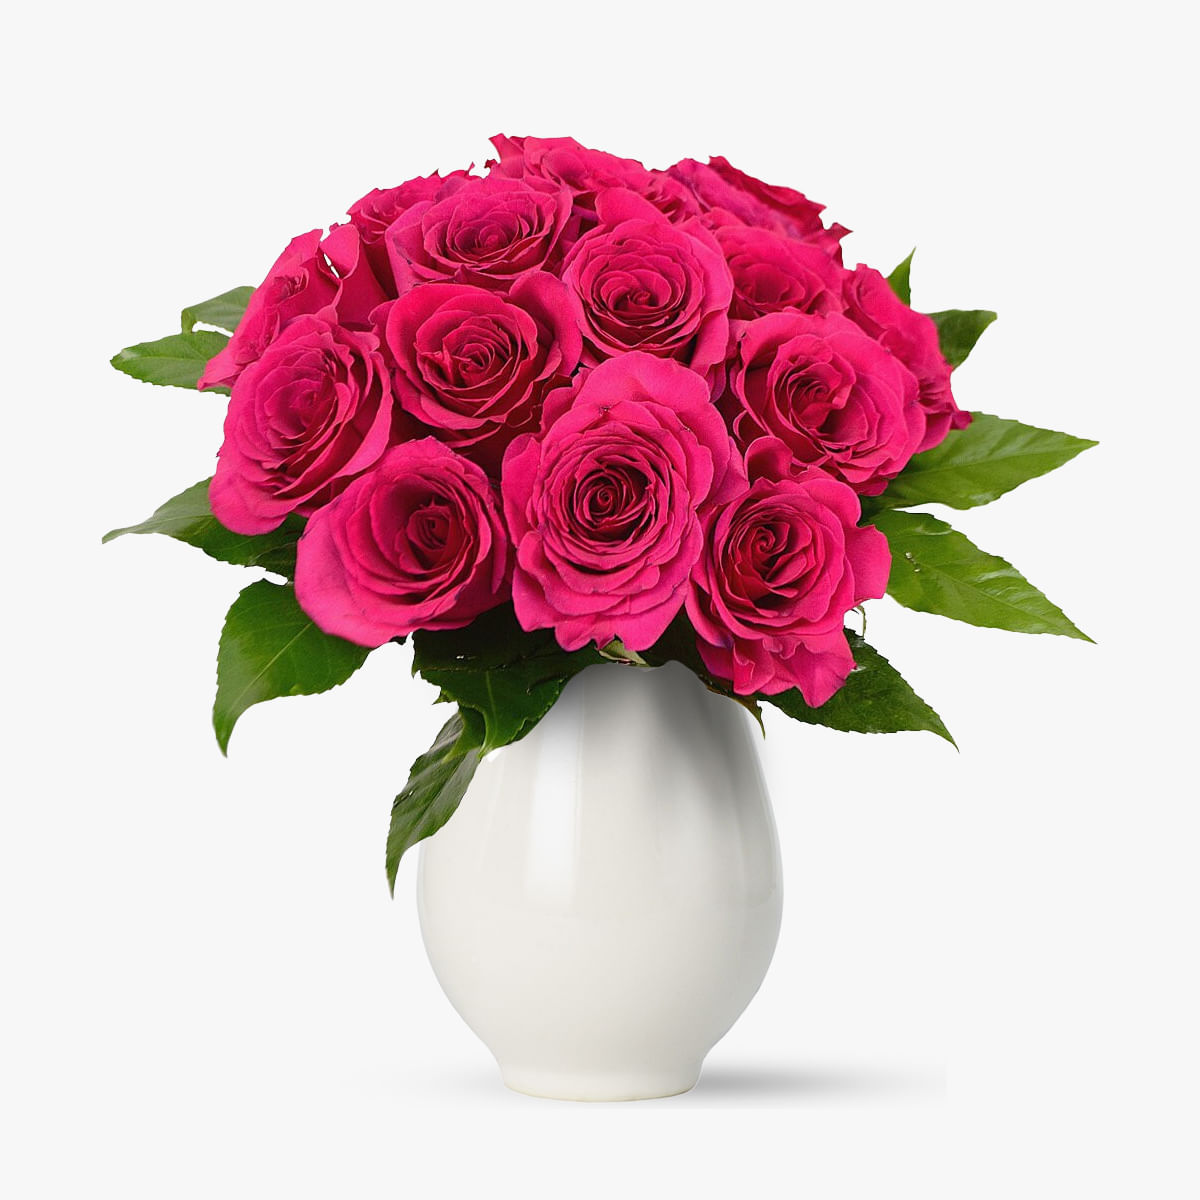 Buchet de 17 trandafiri roz – Standard Buchet